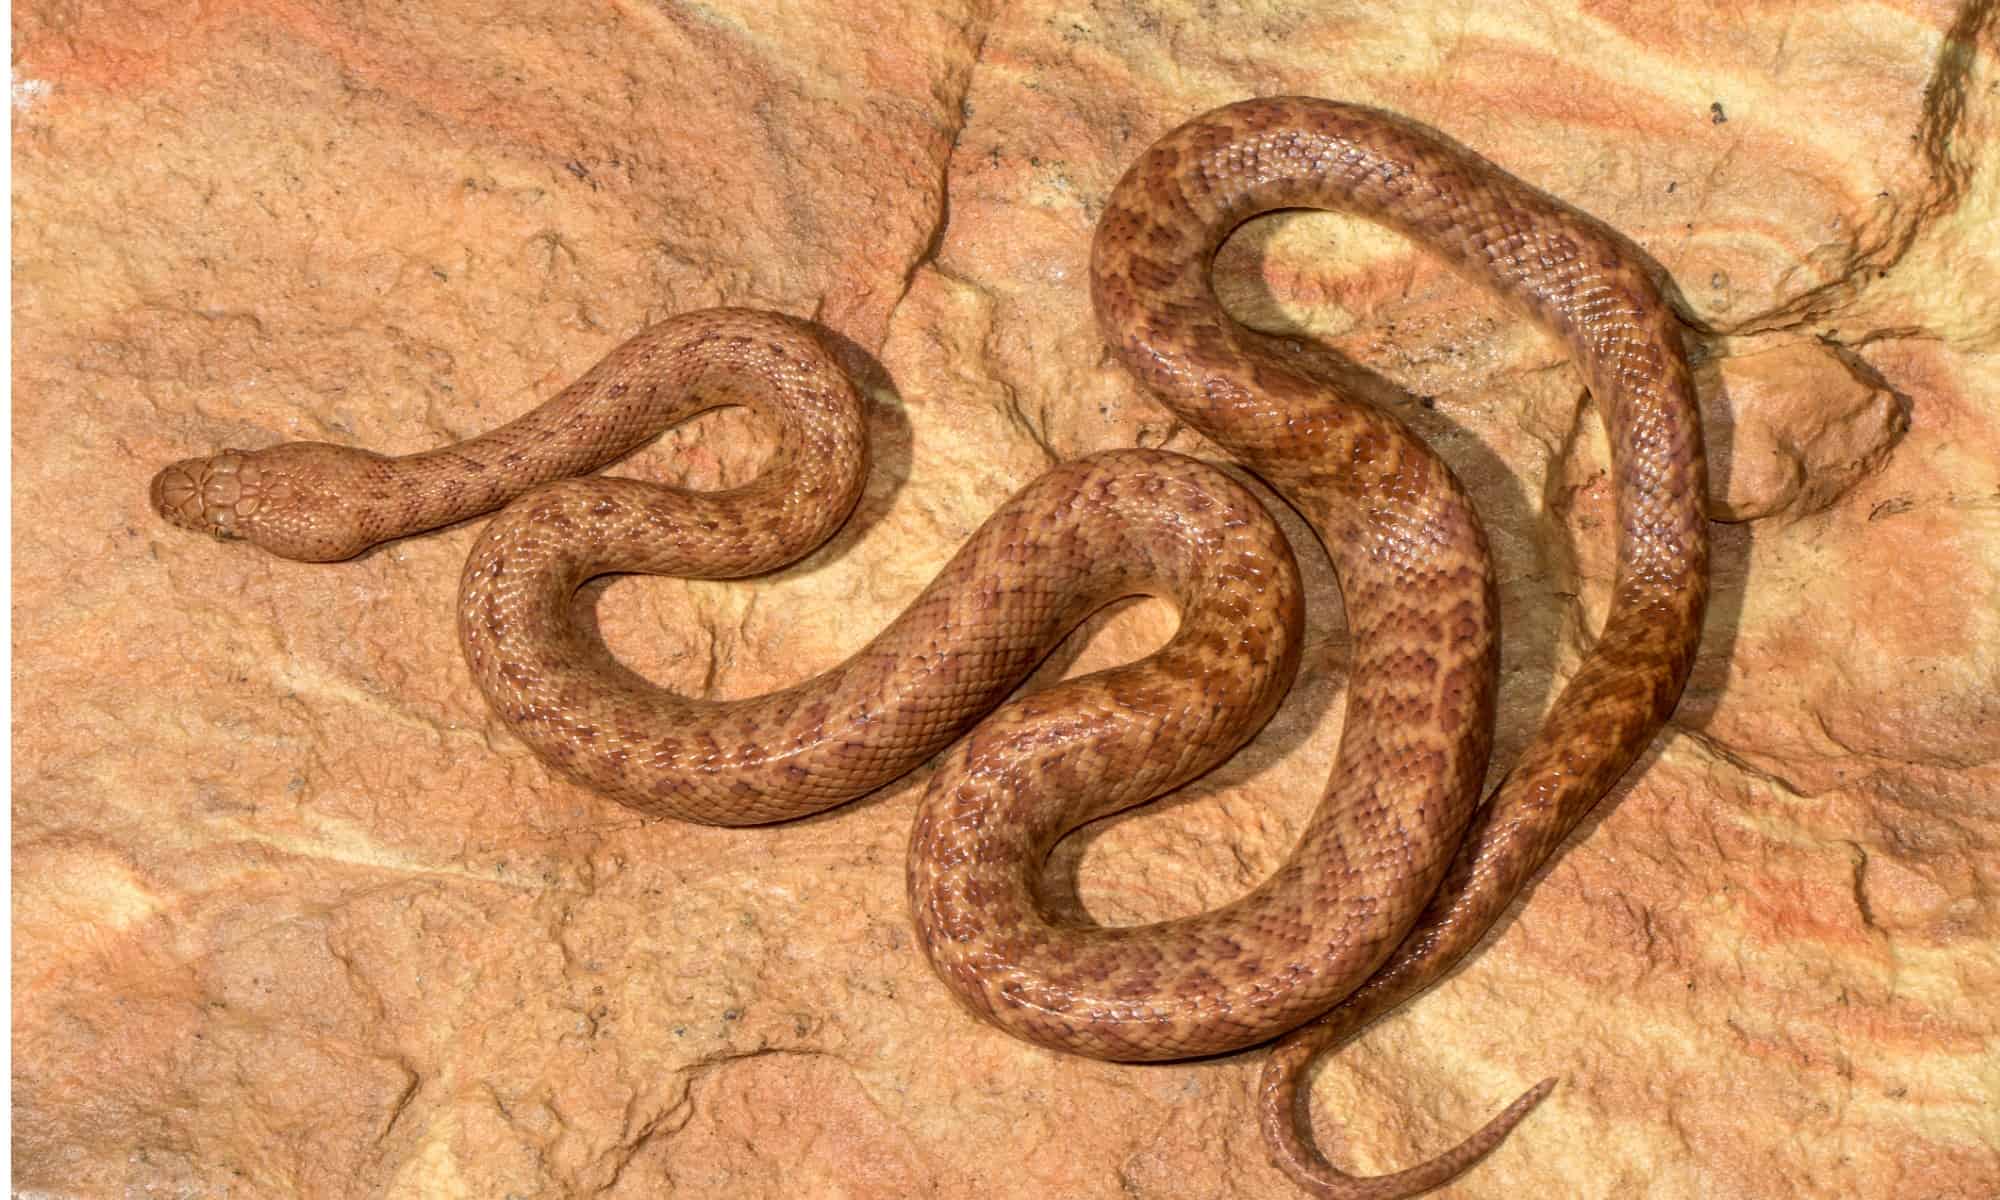 Are Snakes Vertebrates, Invertebrates or Something Else? - AZ Animals